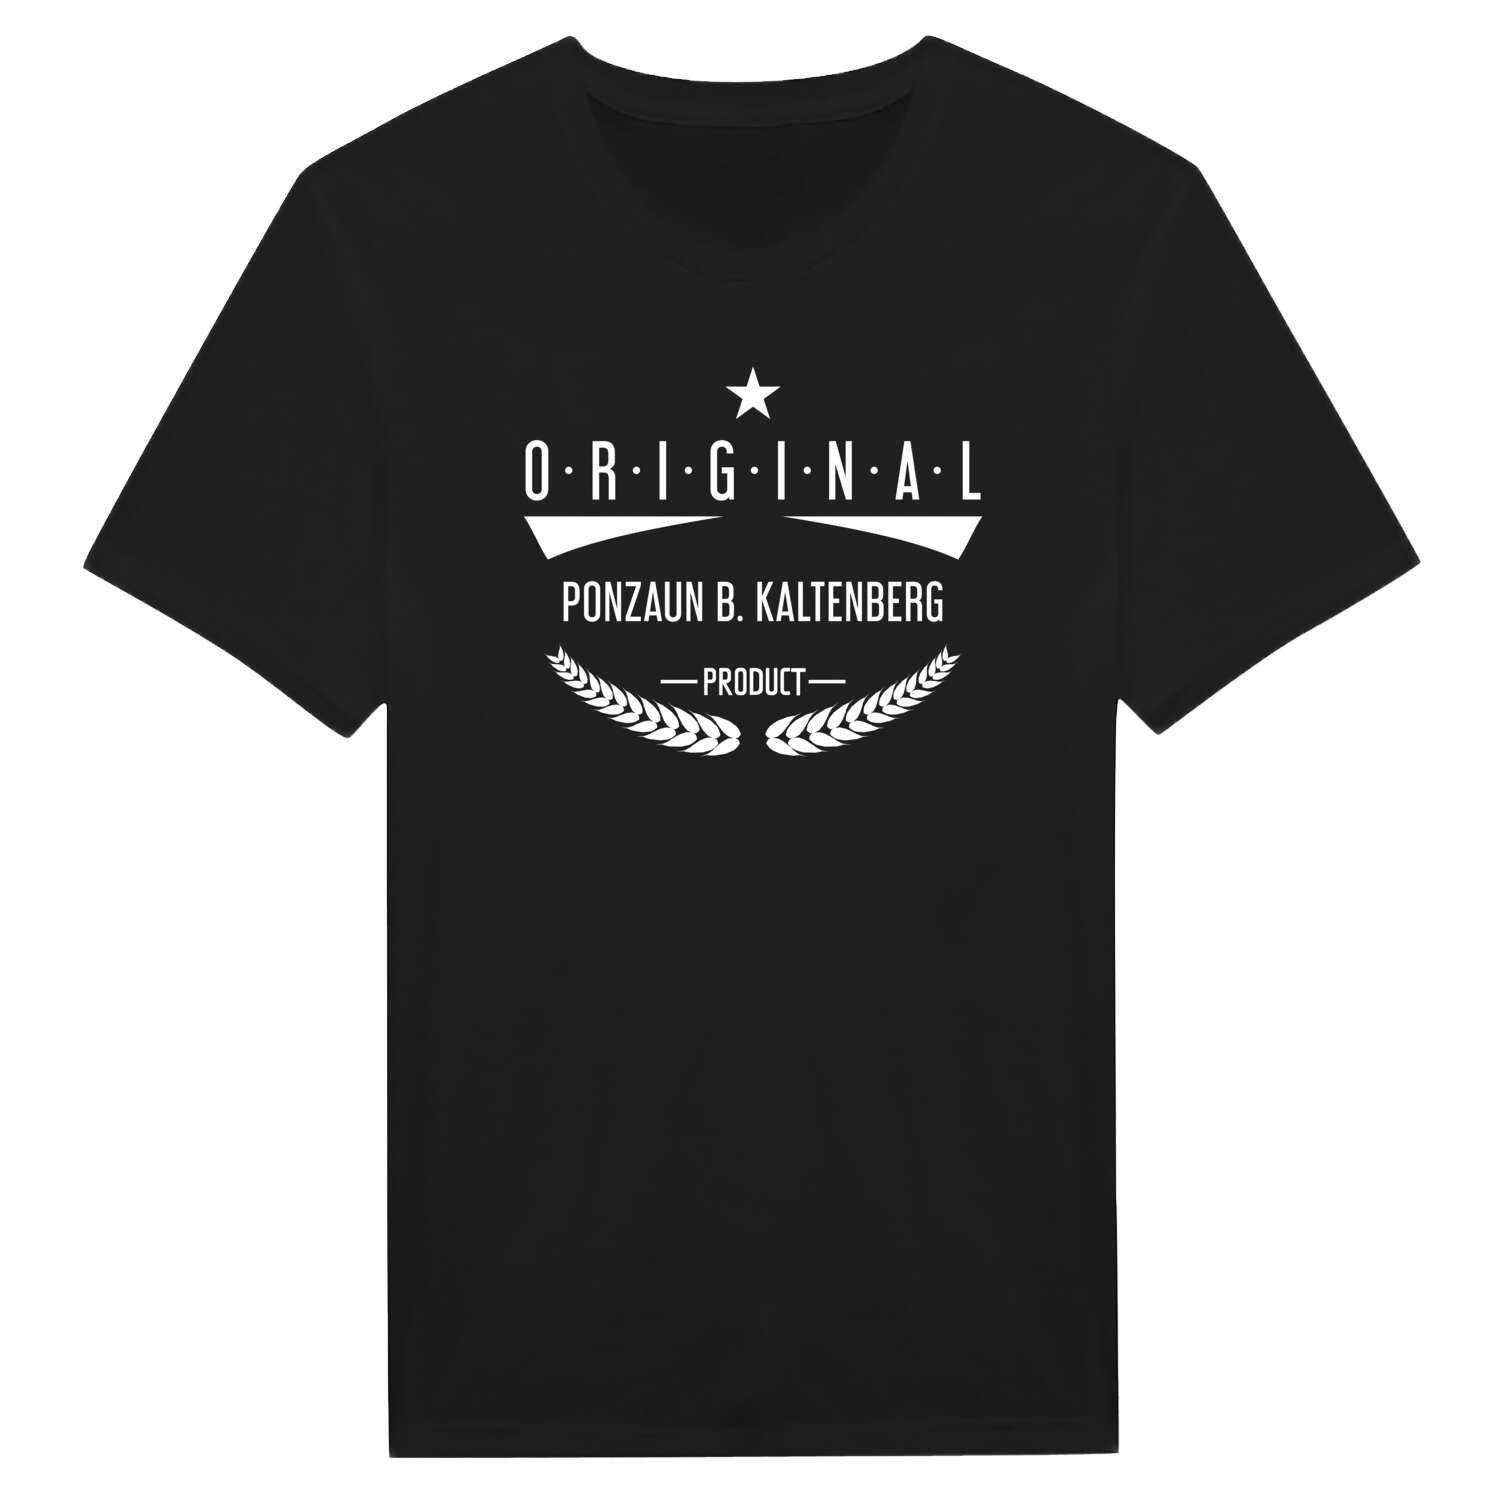 Ponzaun b. Kaltenberg T-Shirt »Original Product«